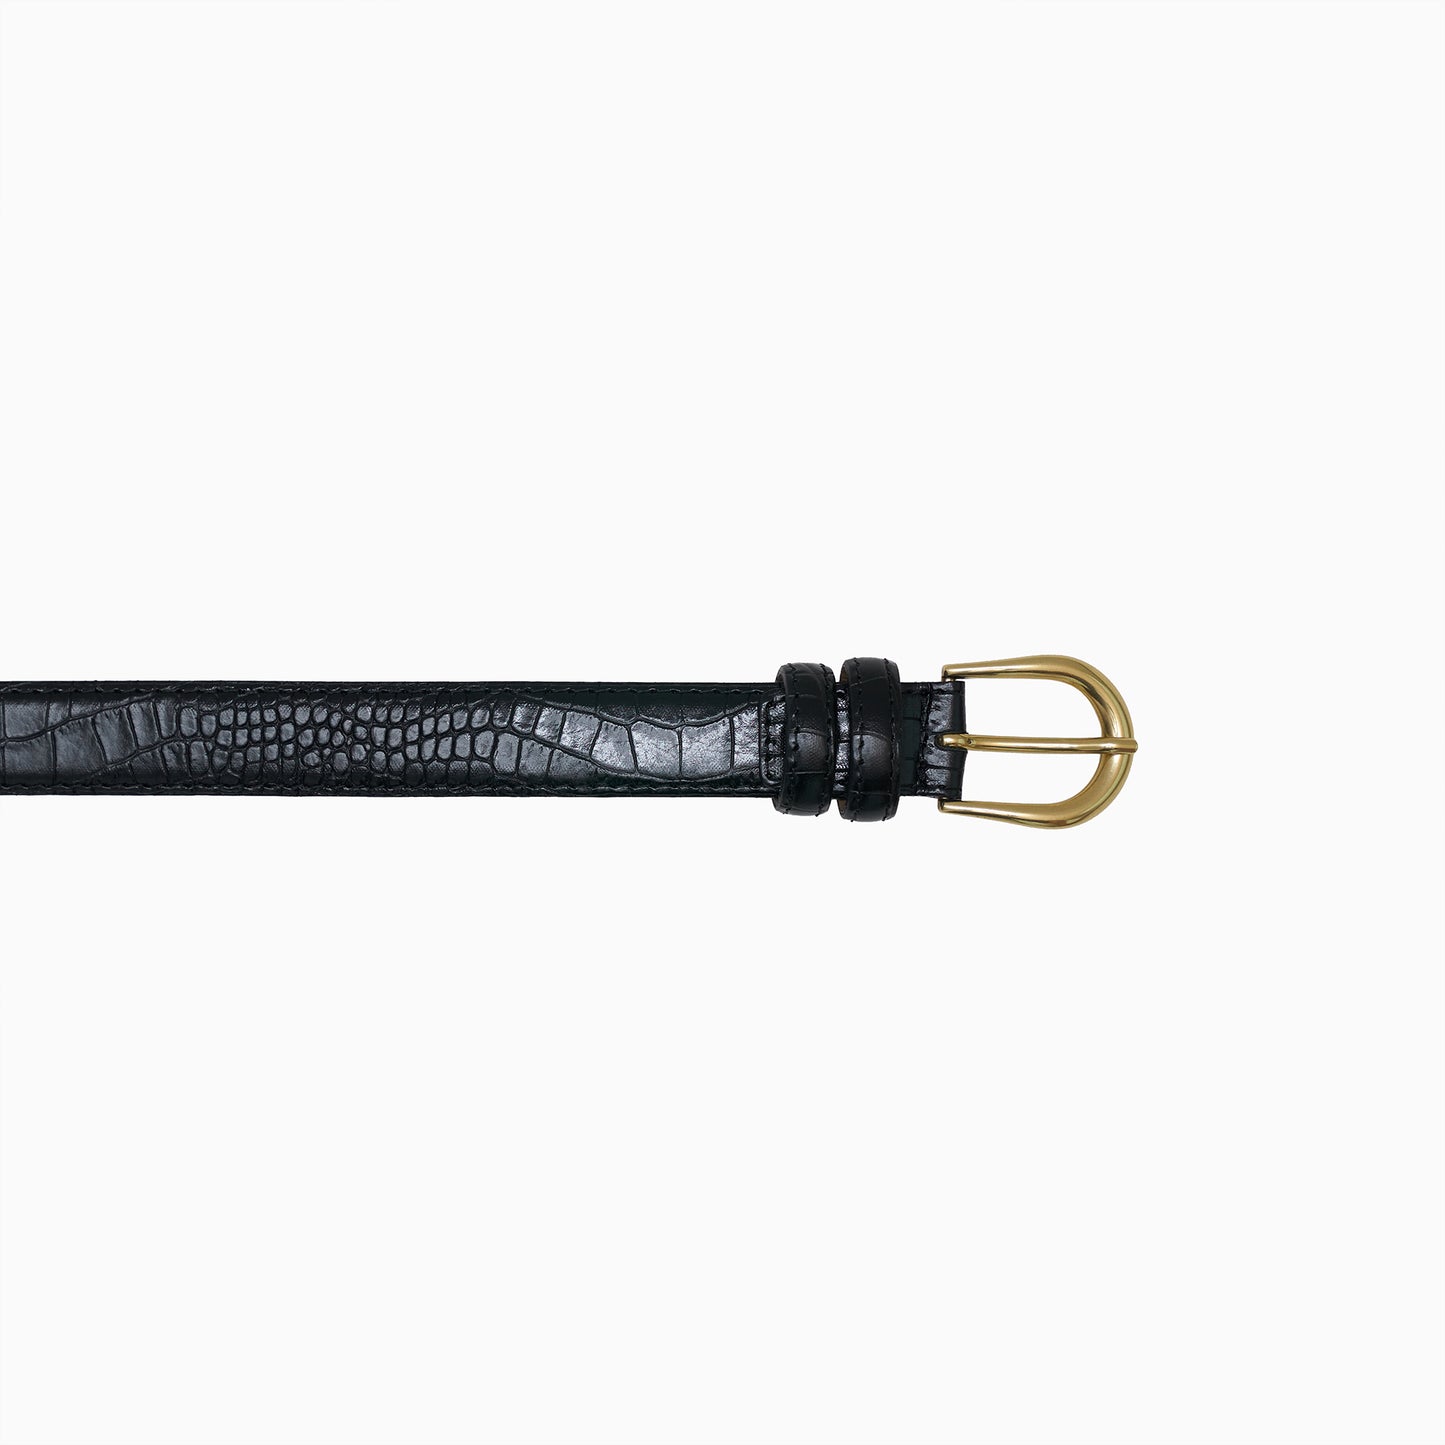 Black Croco Print 1” Leather Belt